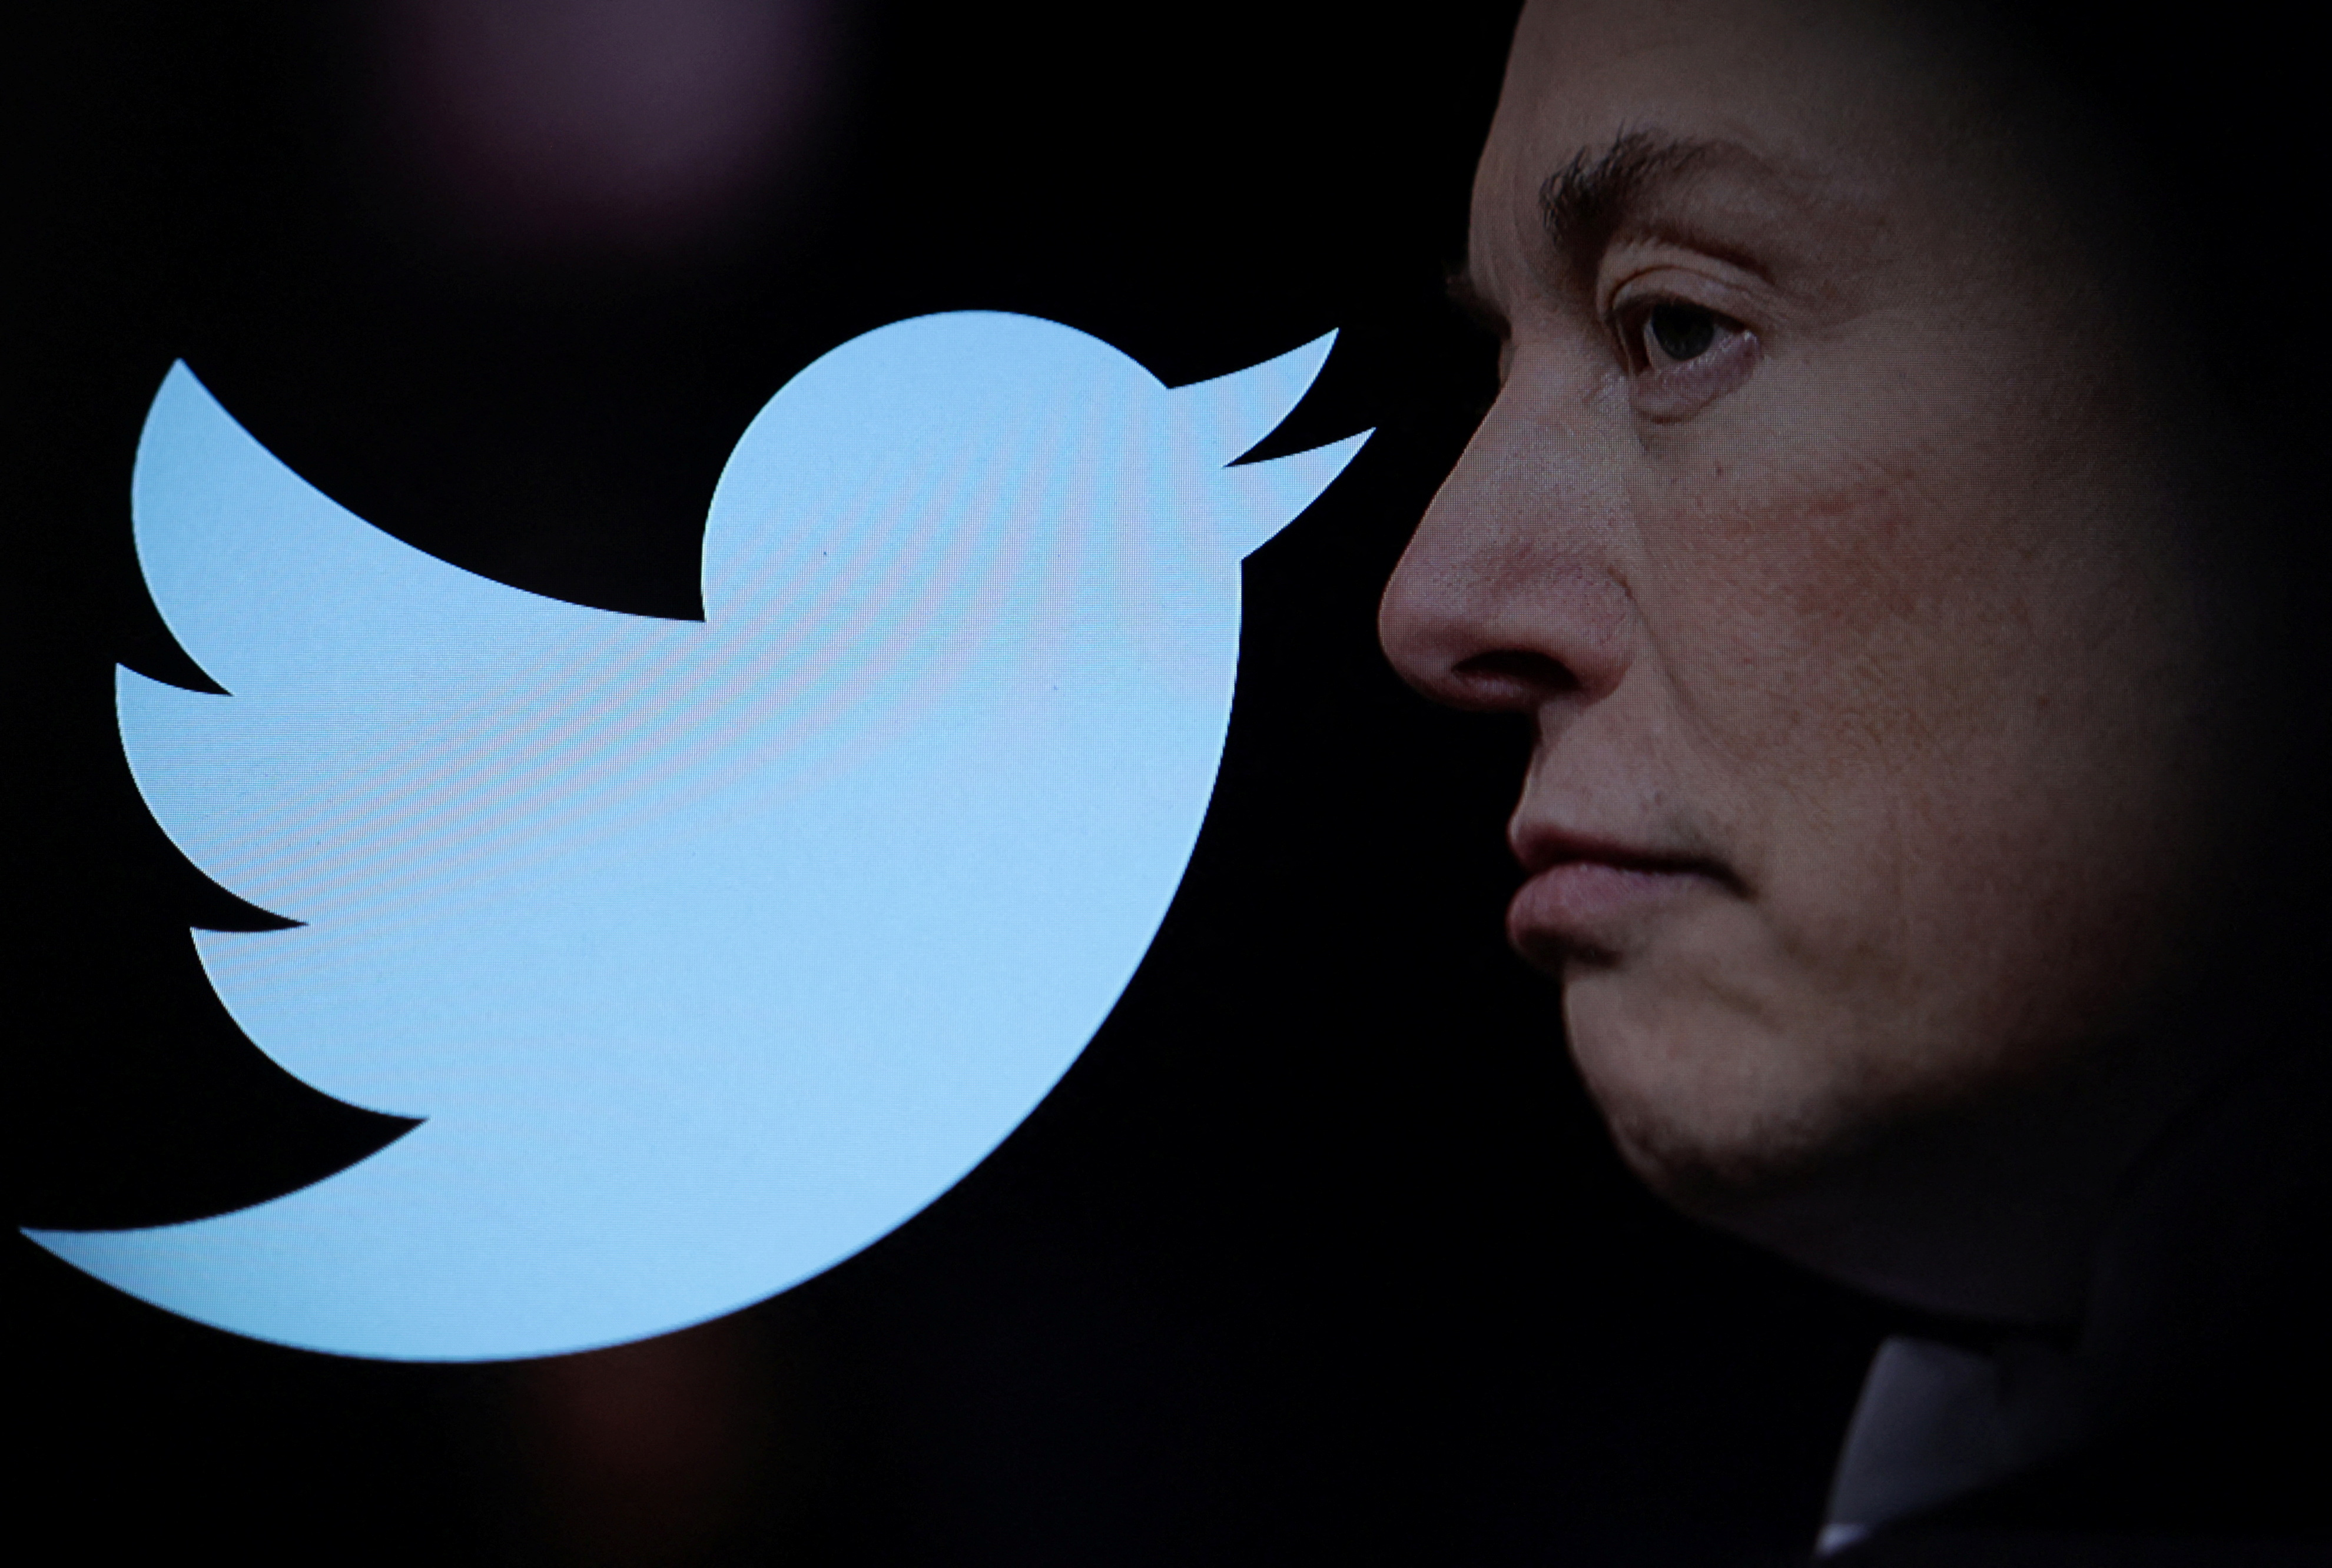  Elon Musk has acquired Twitter